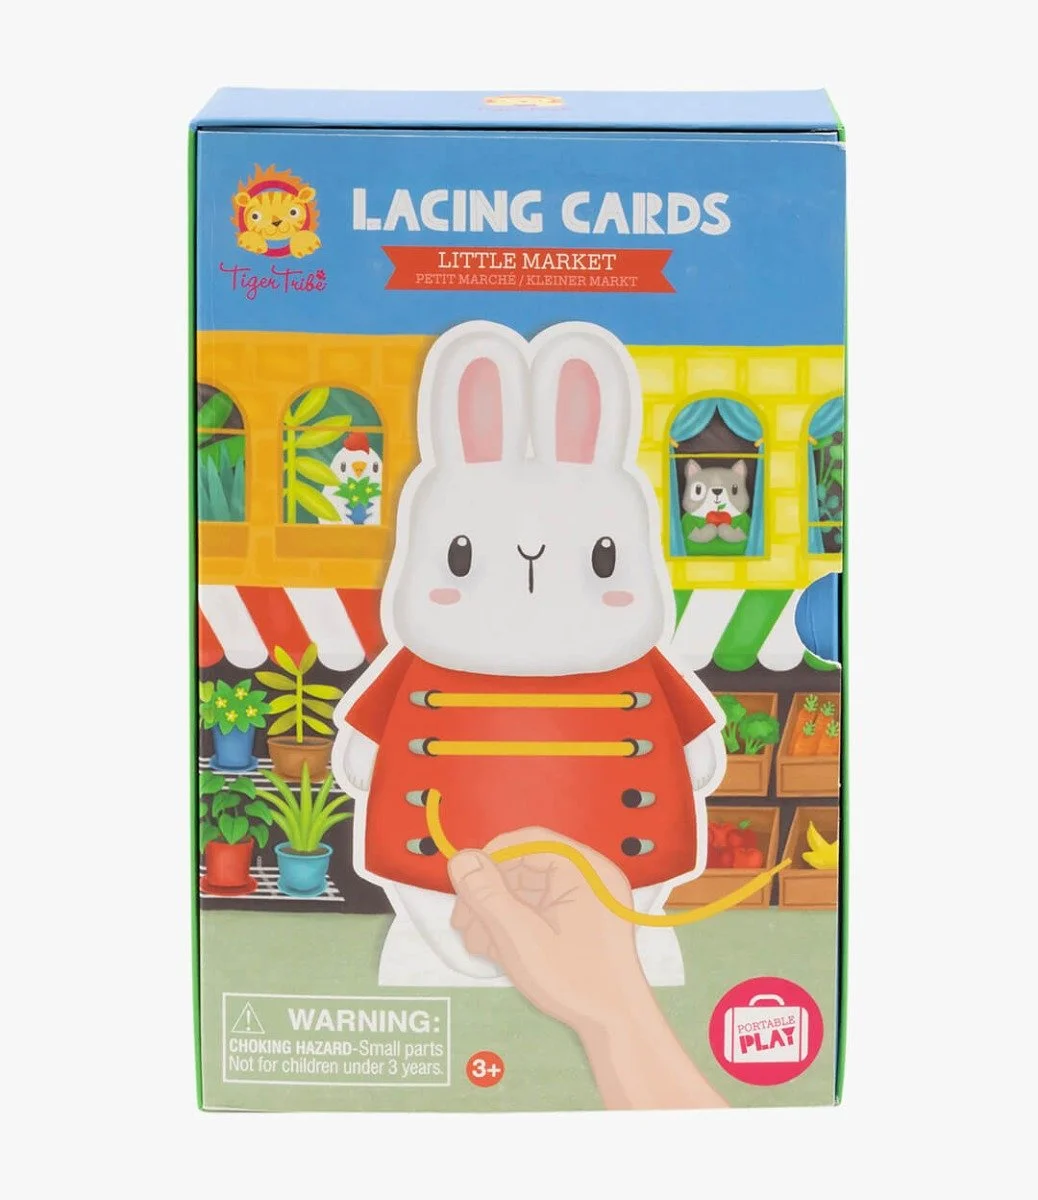 Lacing Cards - Little Market